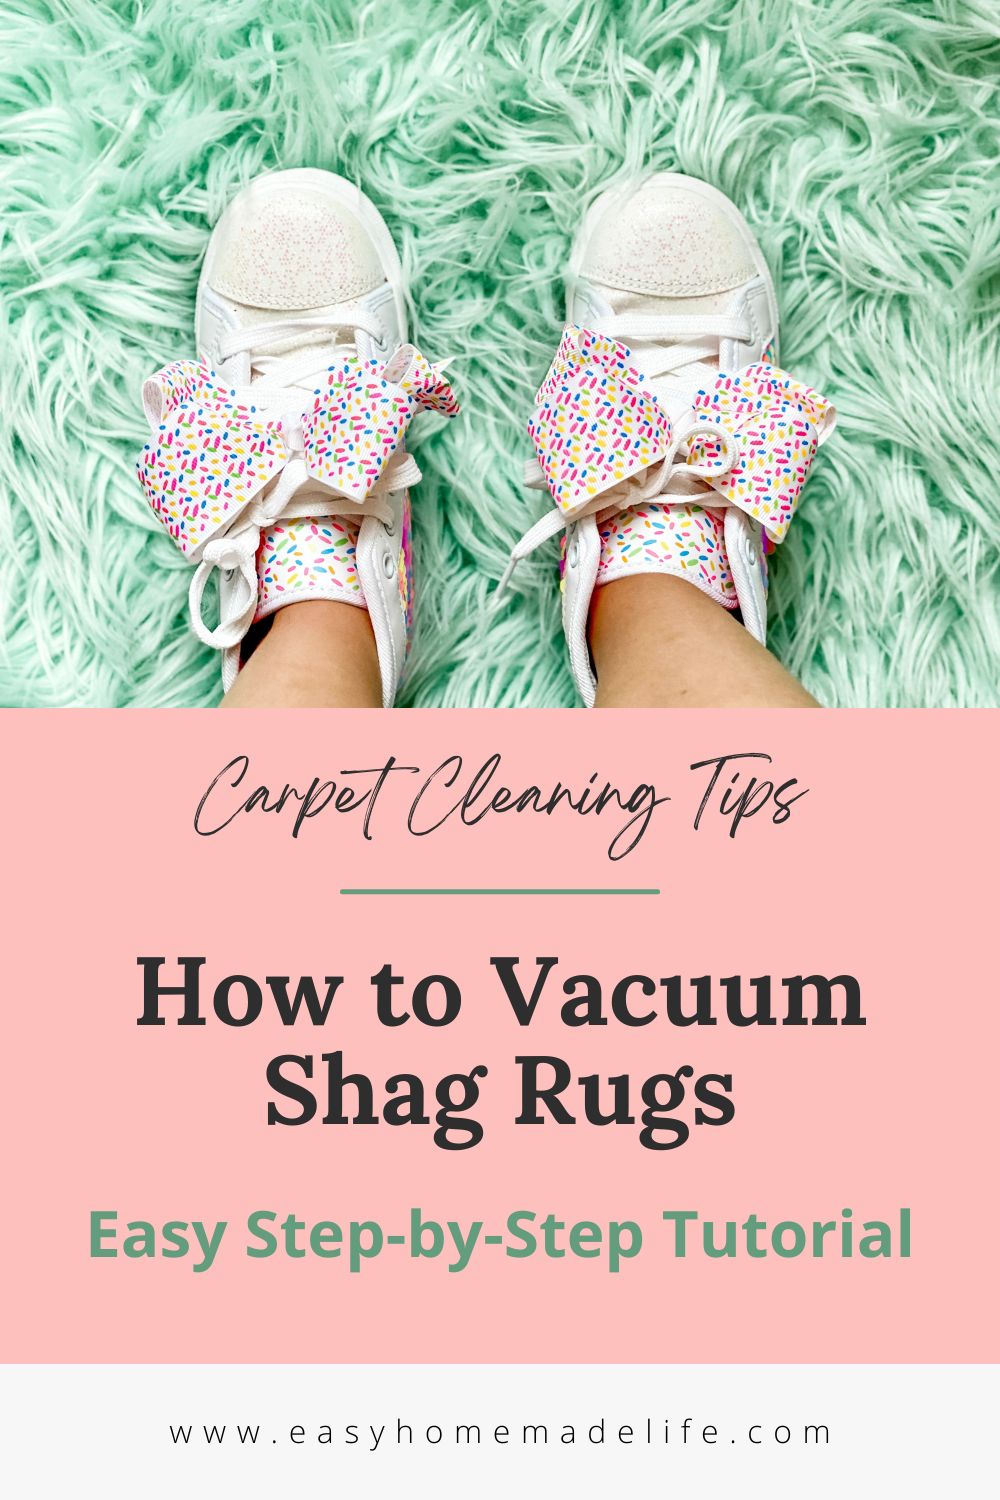 how to vacuum shag rugs tutorial PIN image